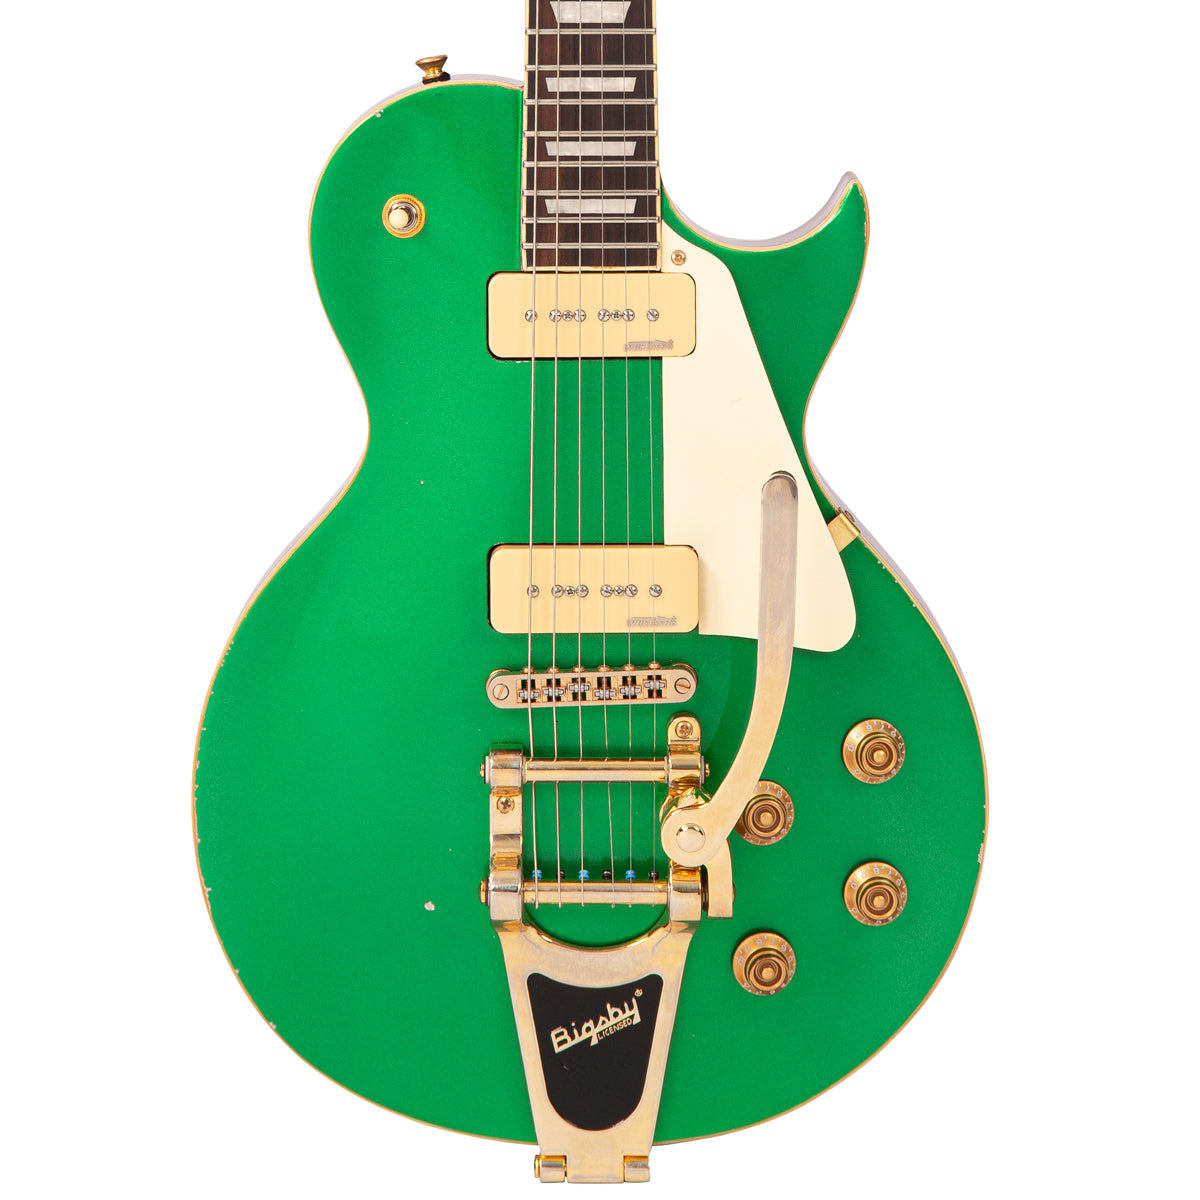 SOLD - Vintage V100 ProShop Custom ~ Emerald Green with Bigsby, Electric Guitars for sale at Richards Guitars.